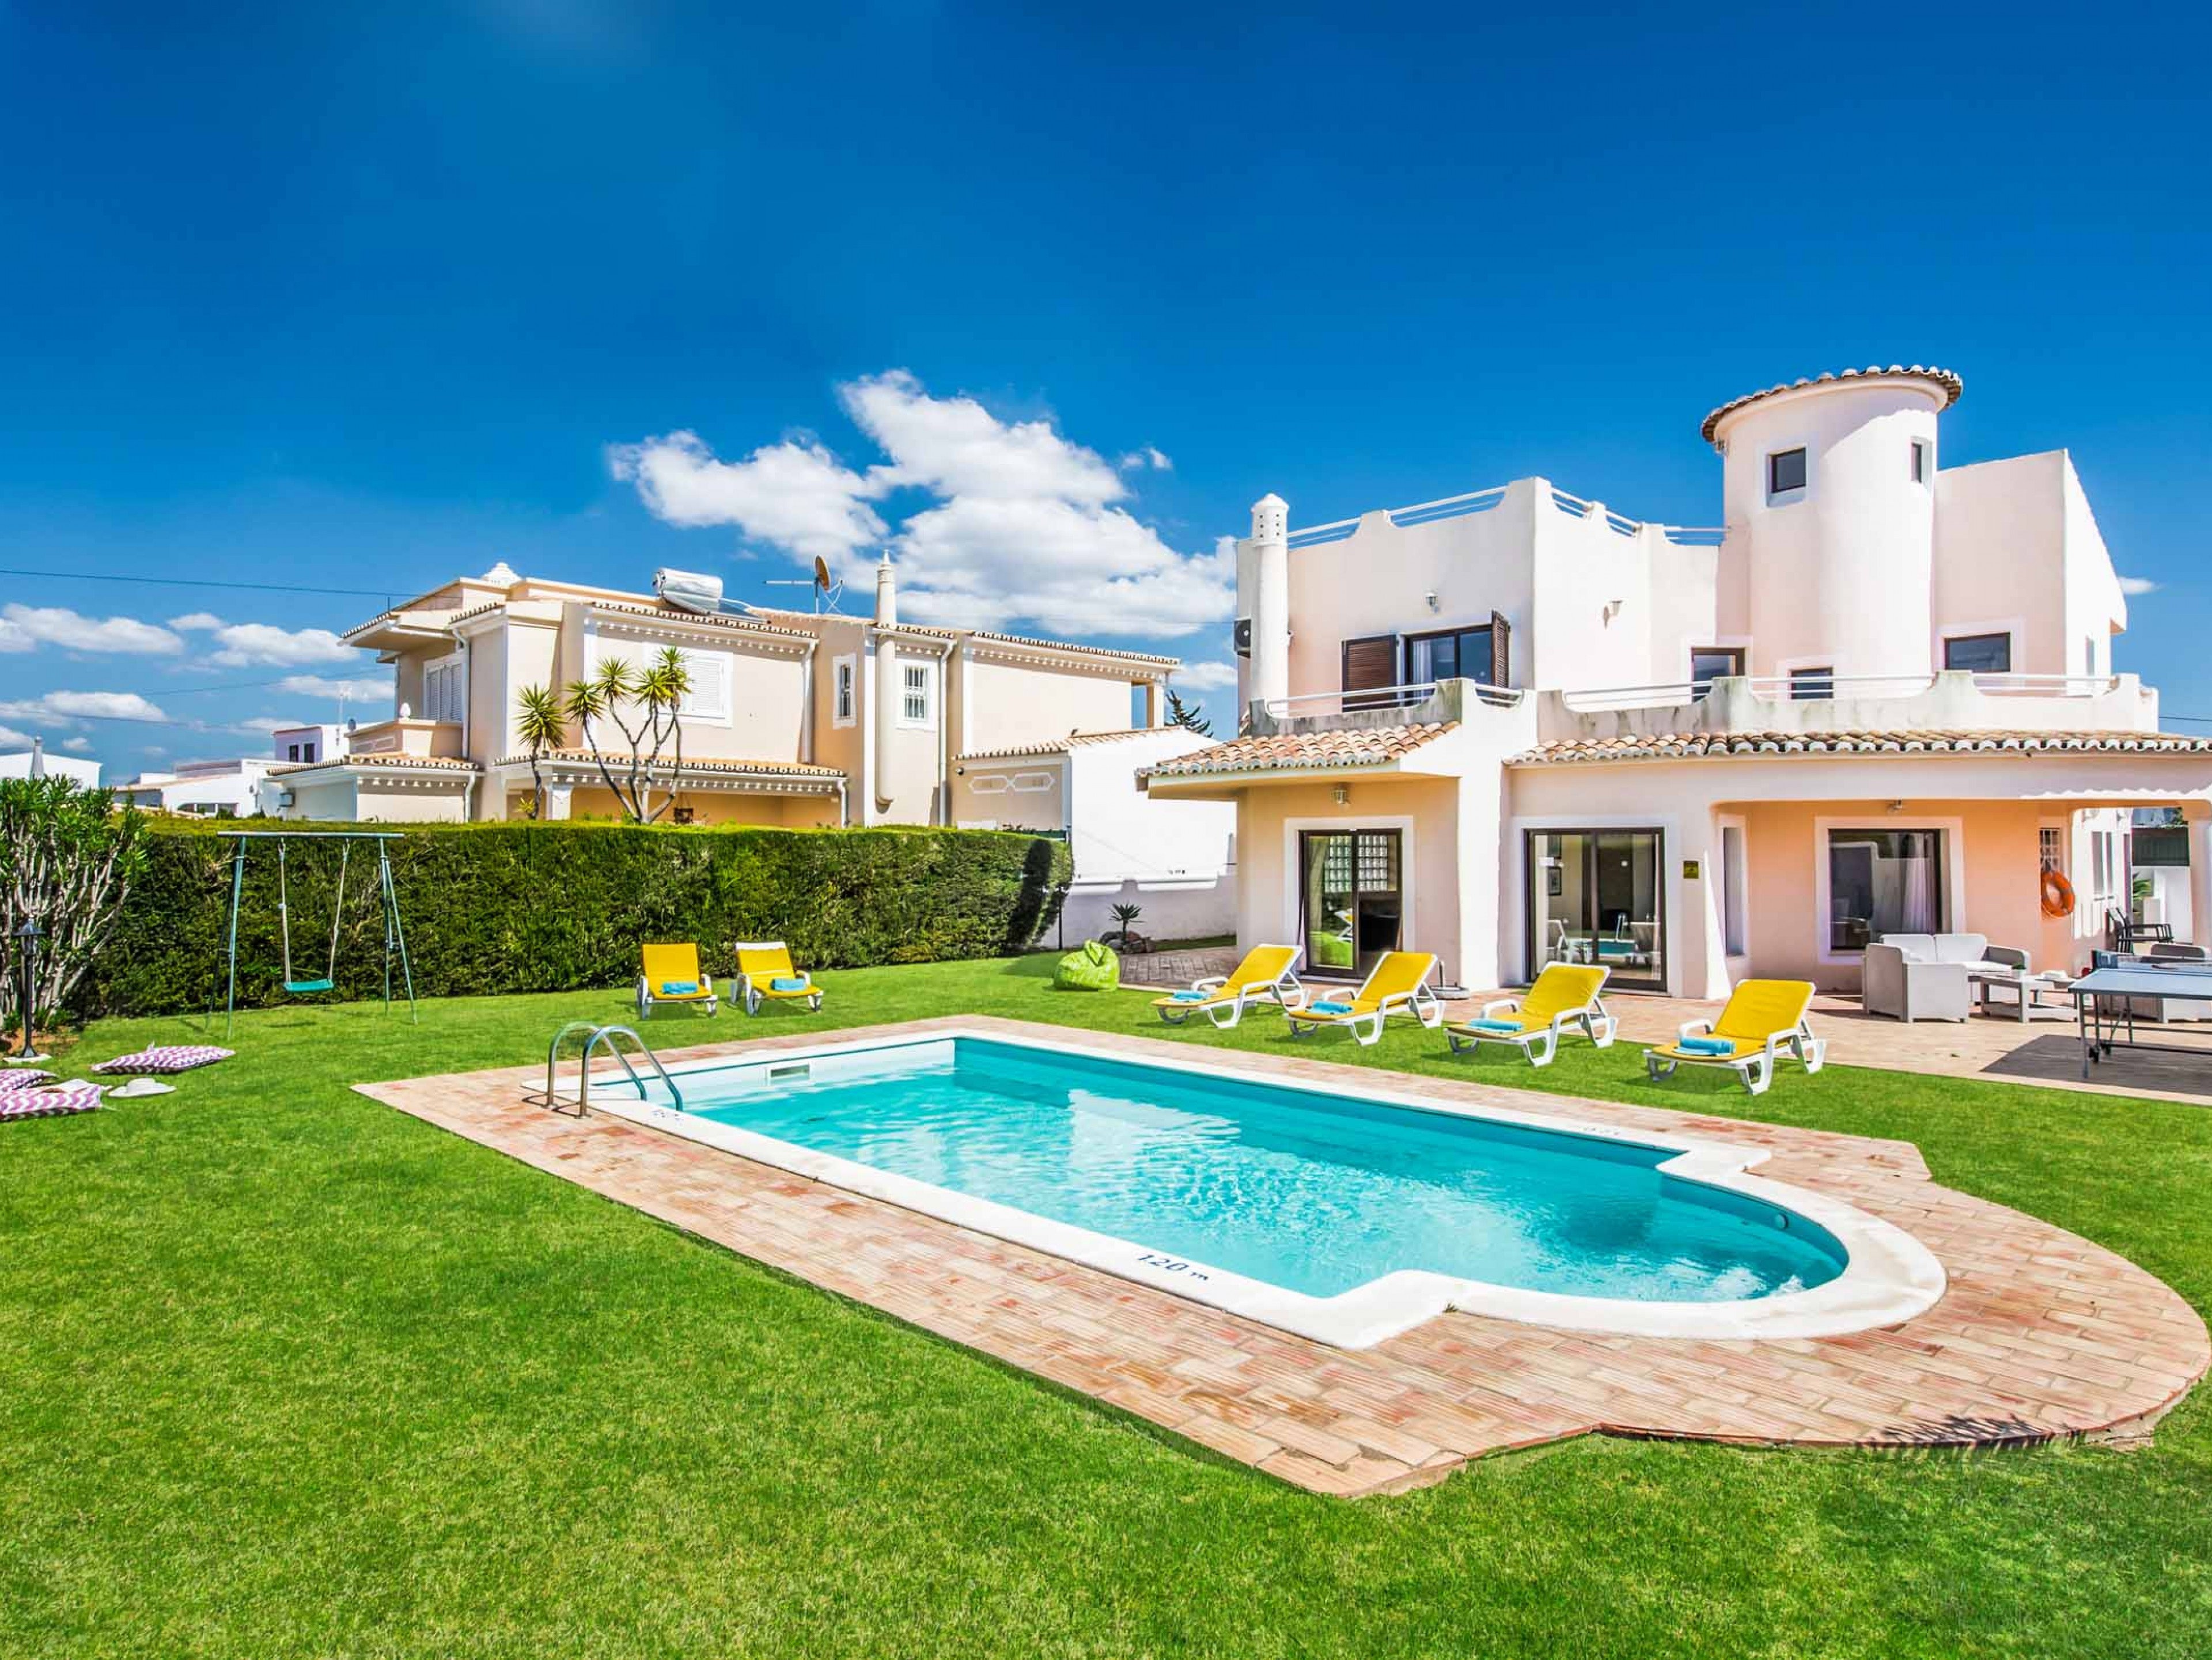 Villa Charlota summer home rentals with pools